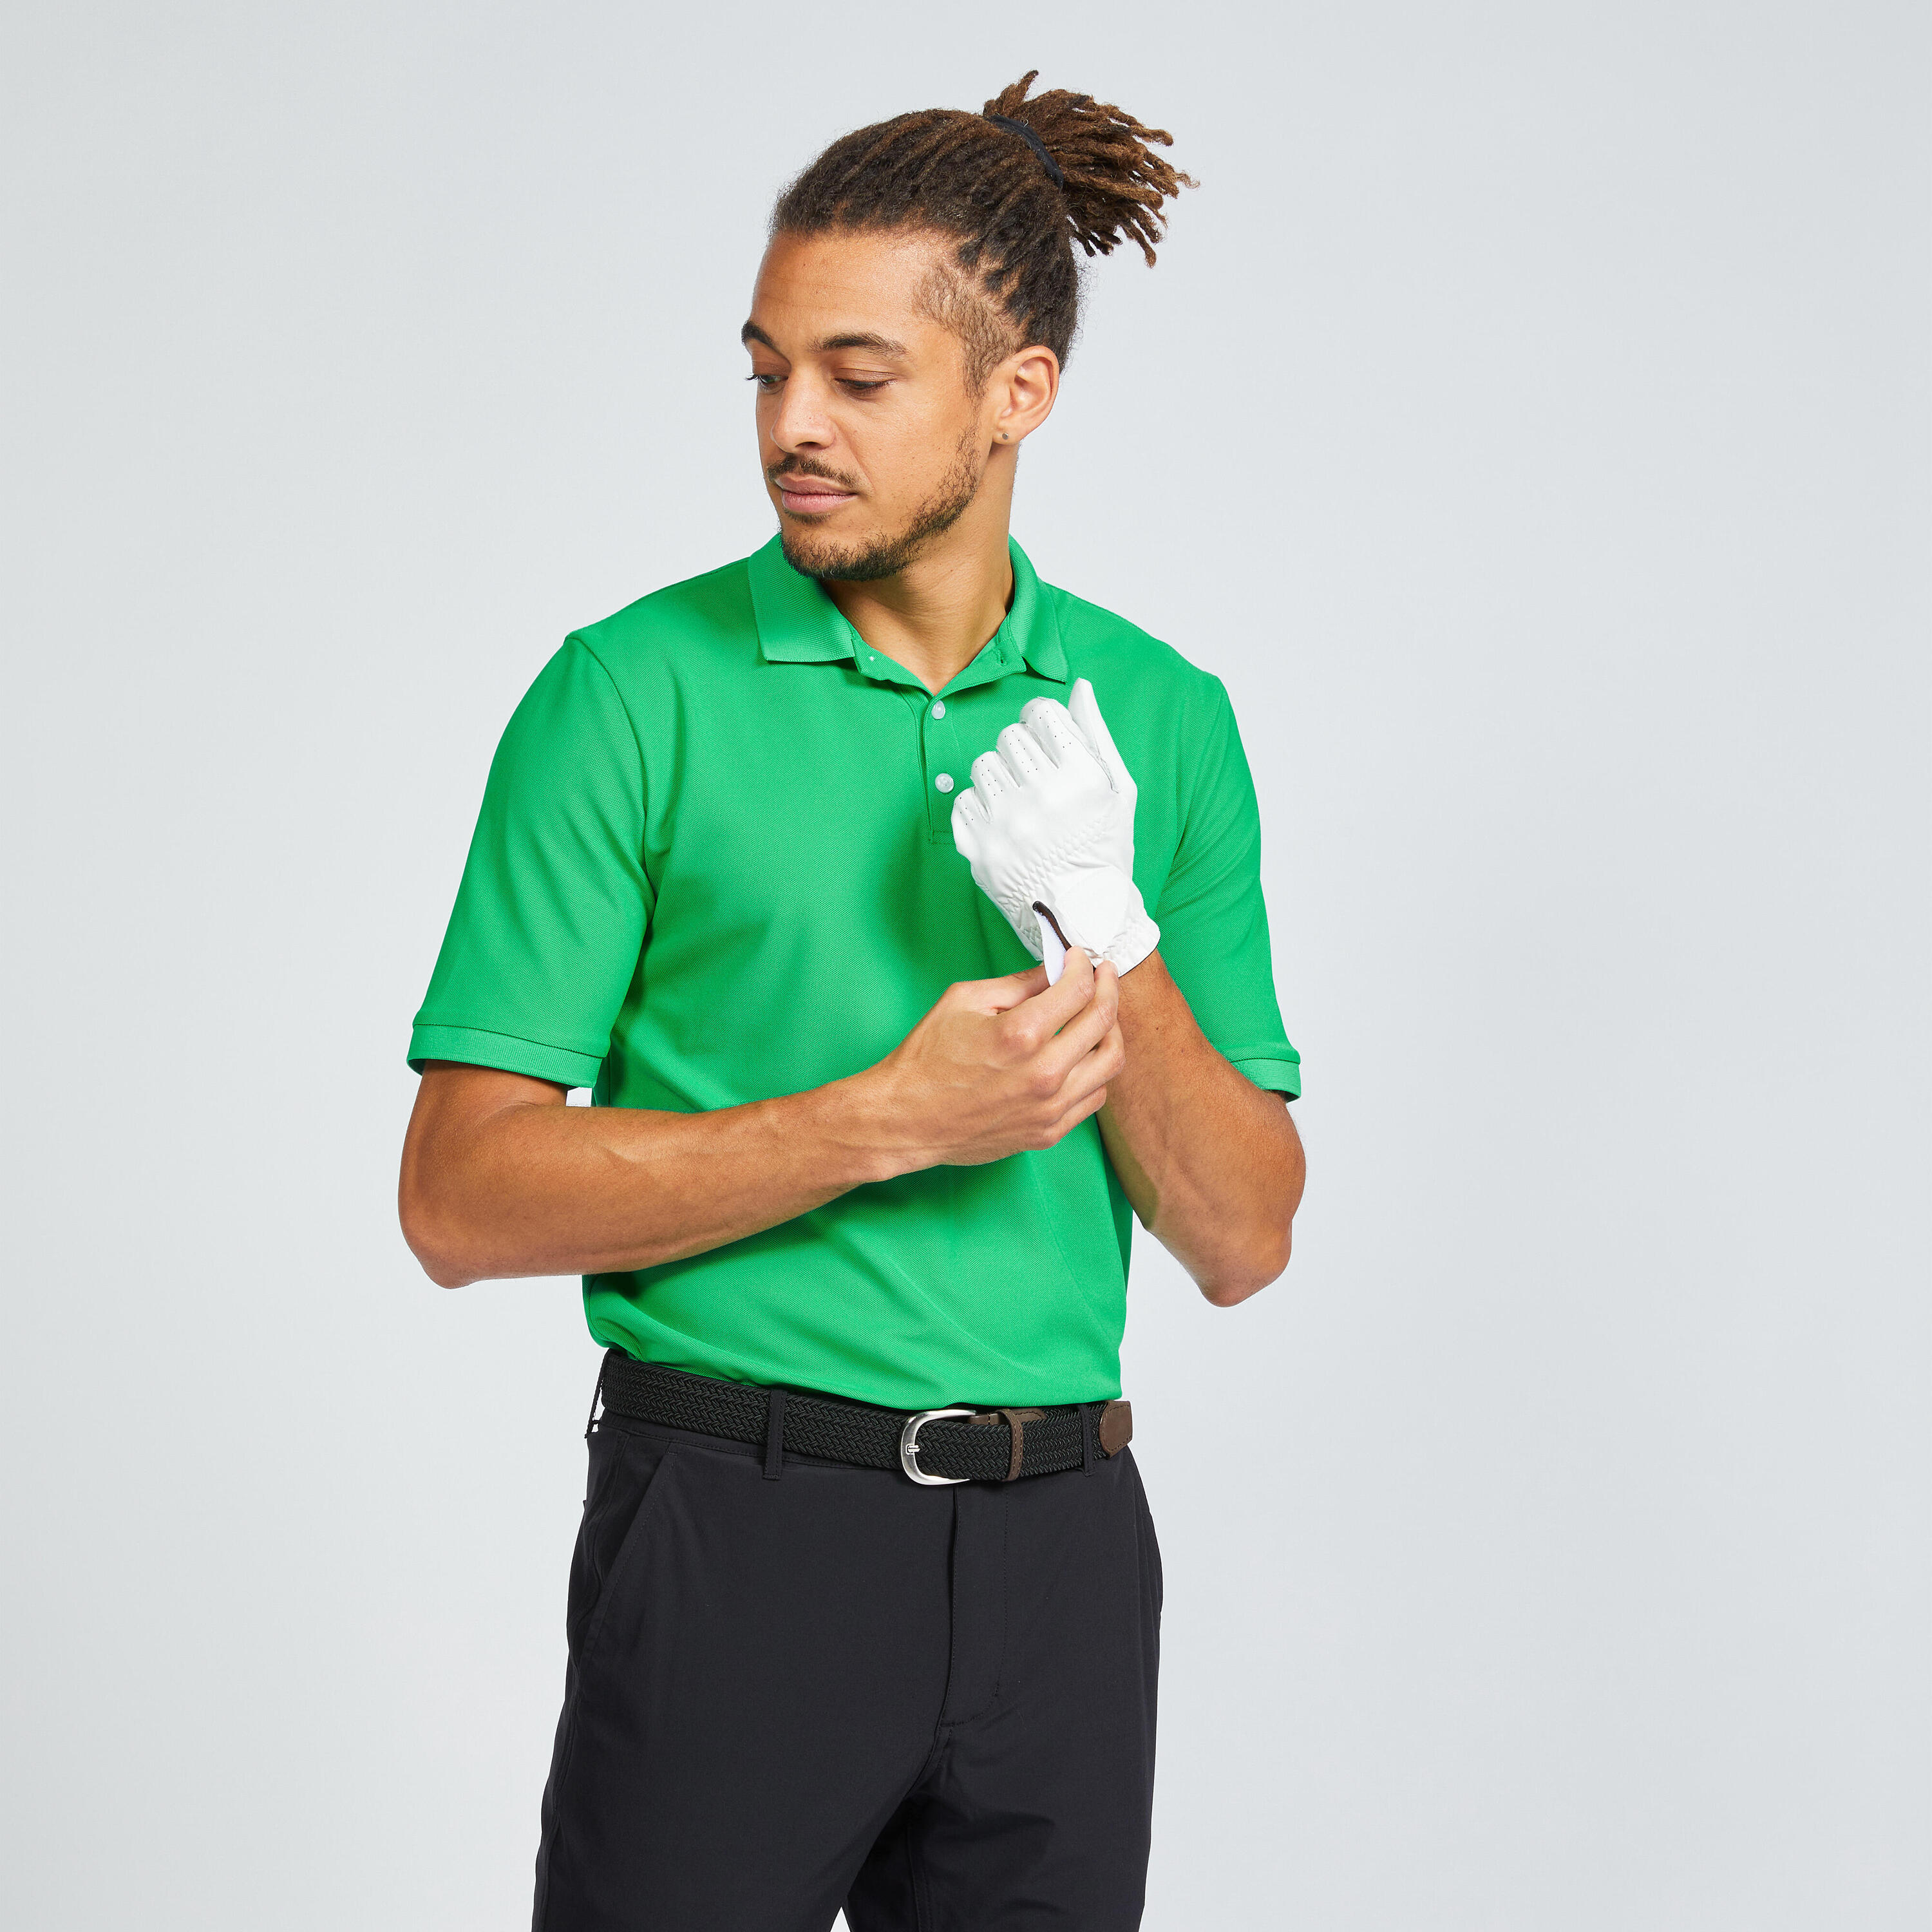 INESIS Men's short-sleeved golf polo shirt - WW500 green